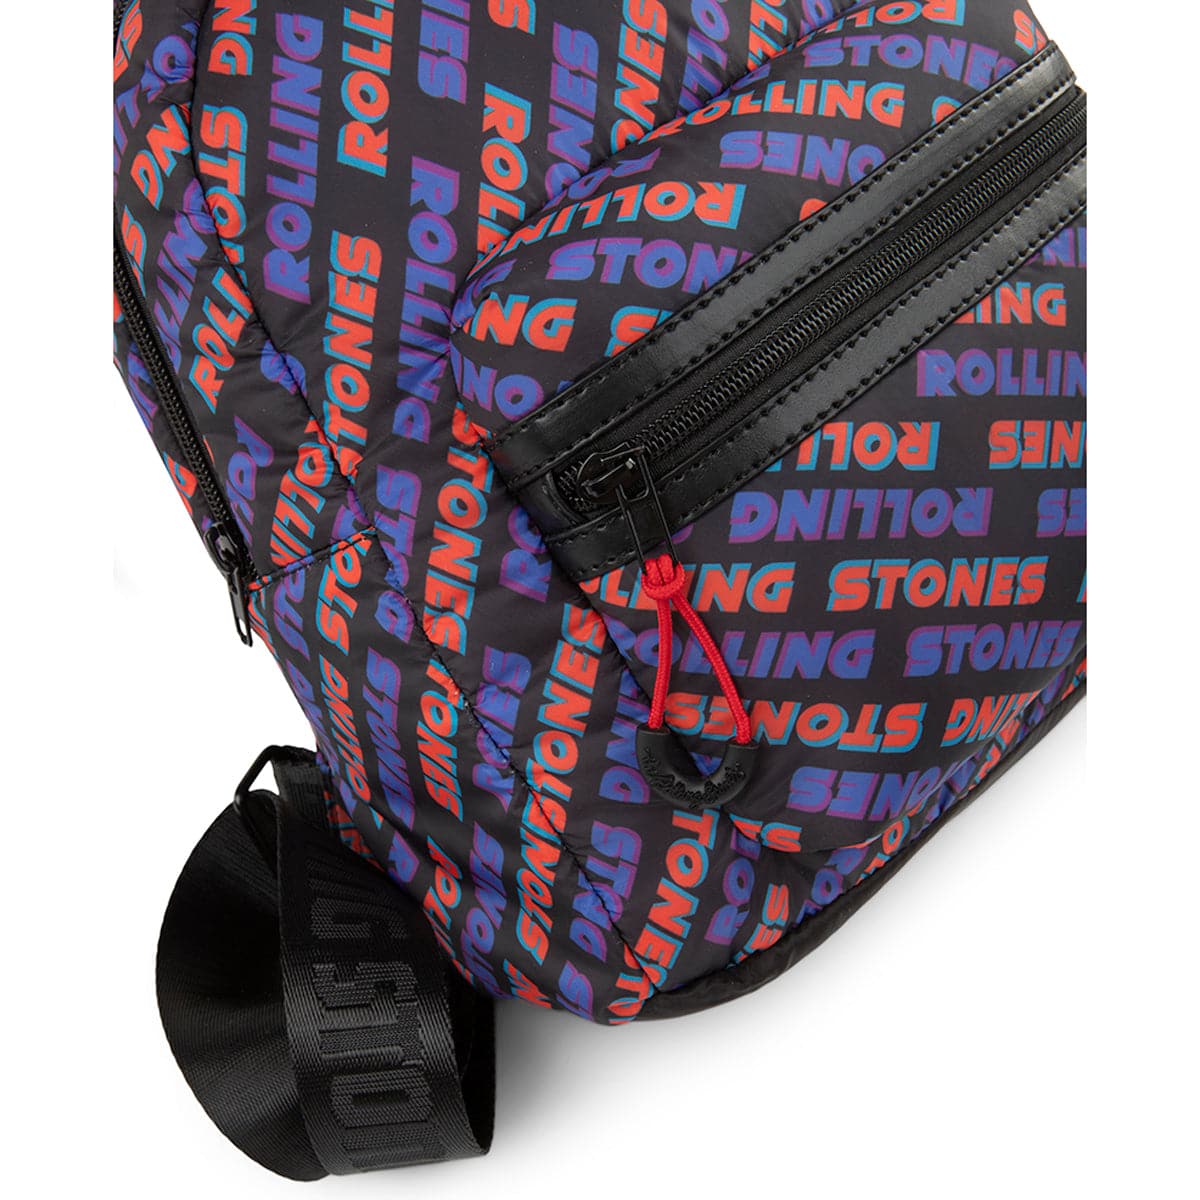 The Rolling Stones Blue Bridges Backpack